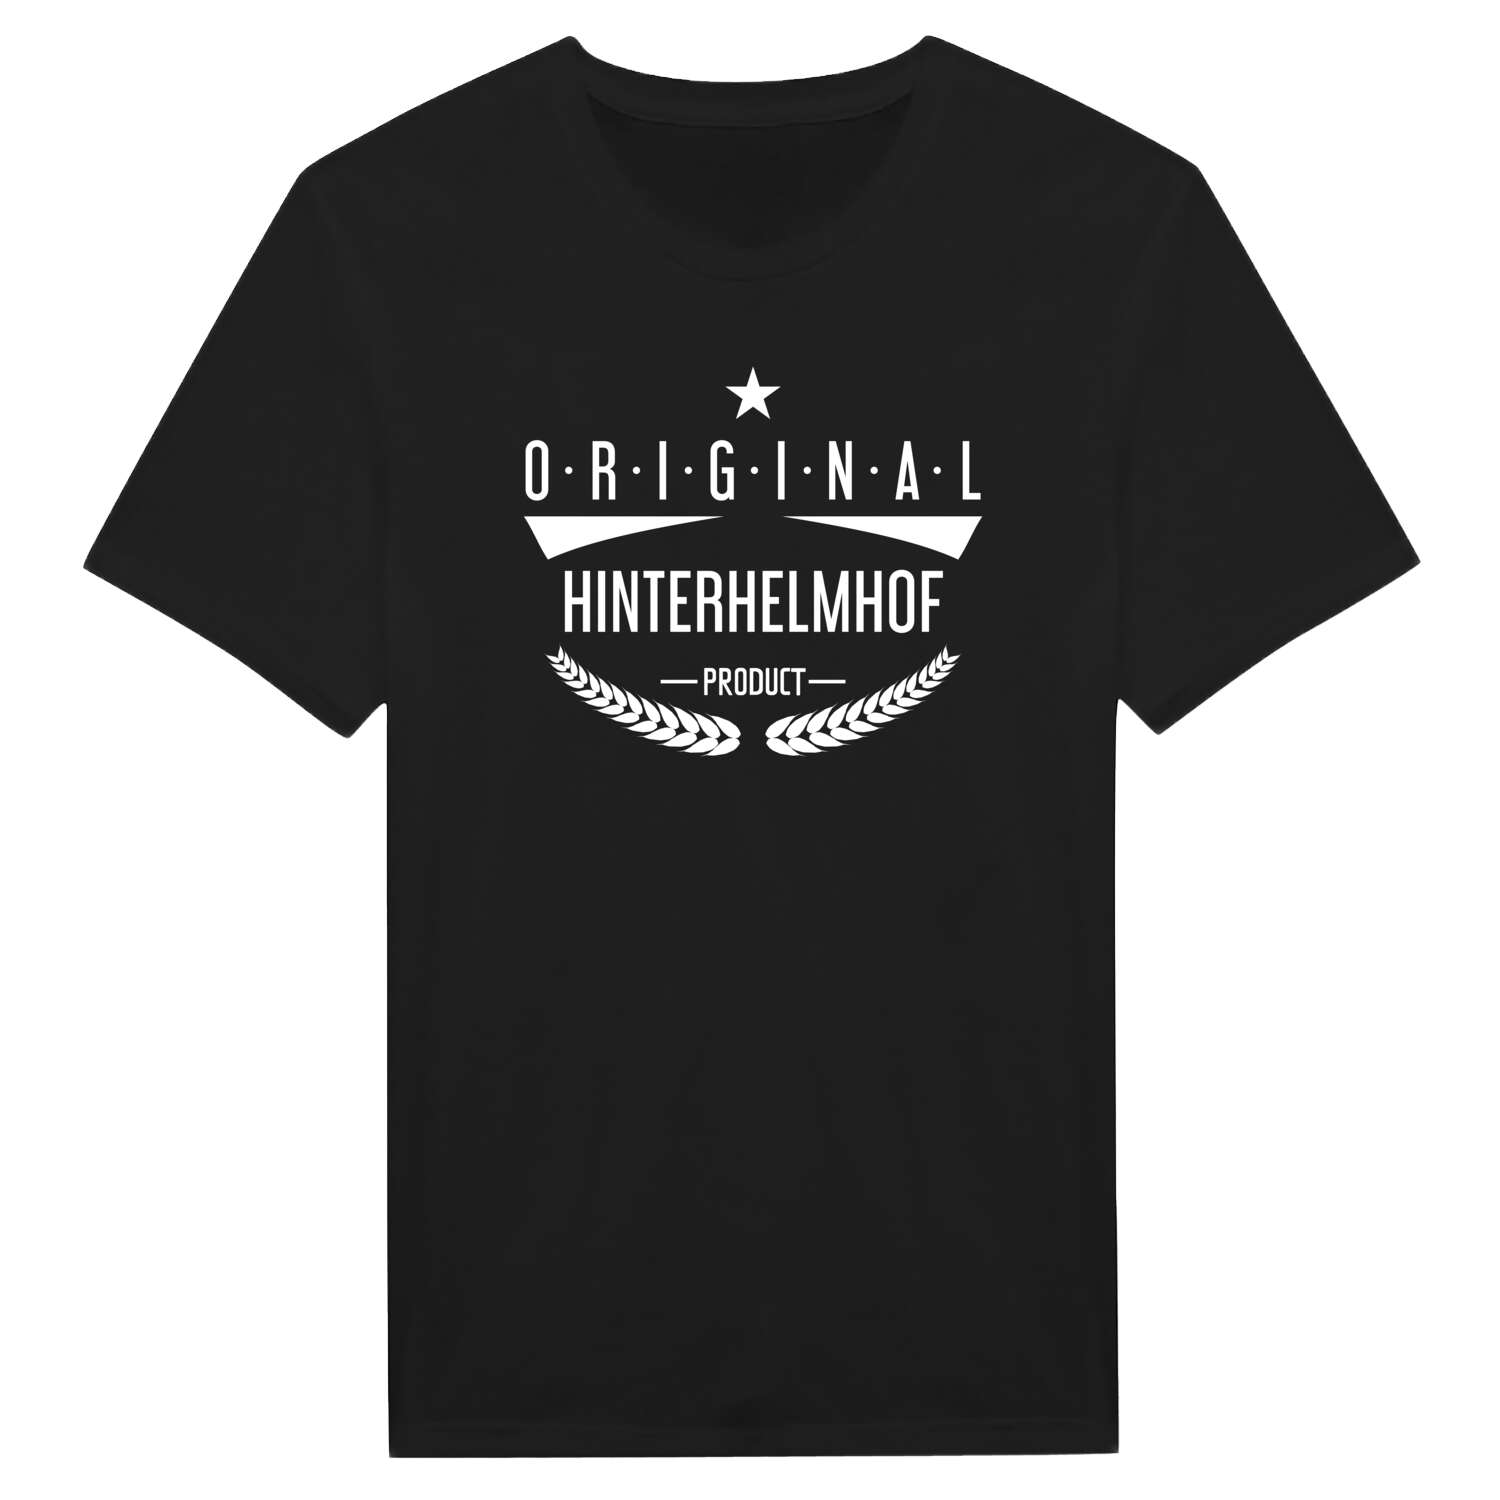 Hinterhelmhof T-Shirt »Original Product«